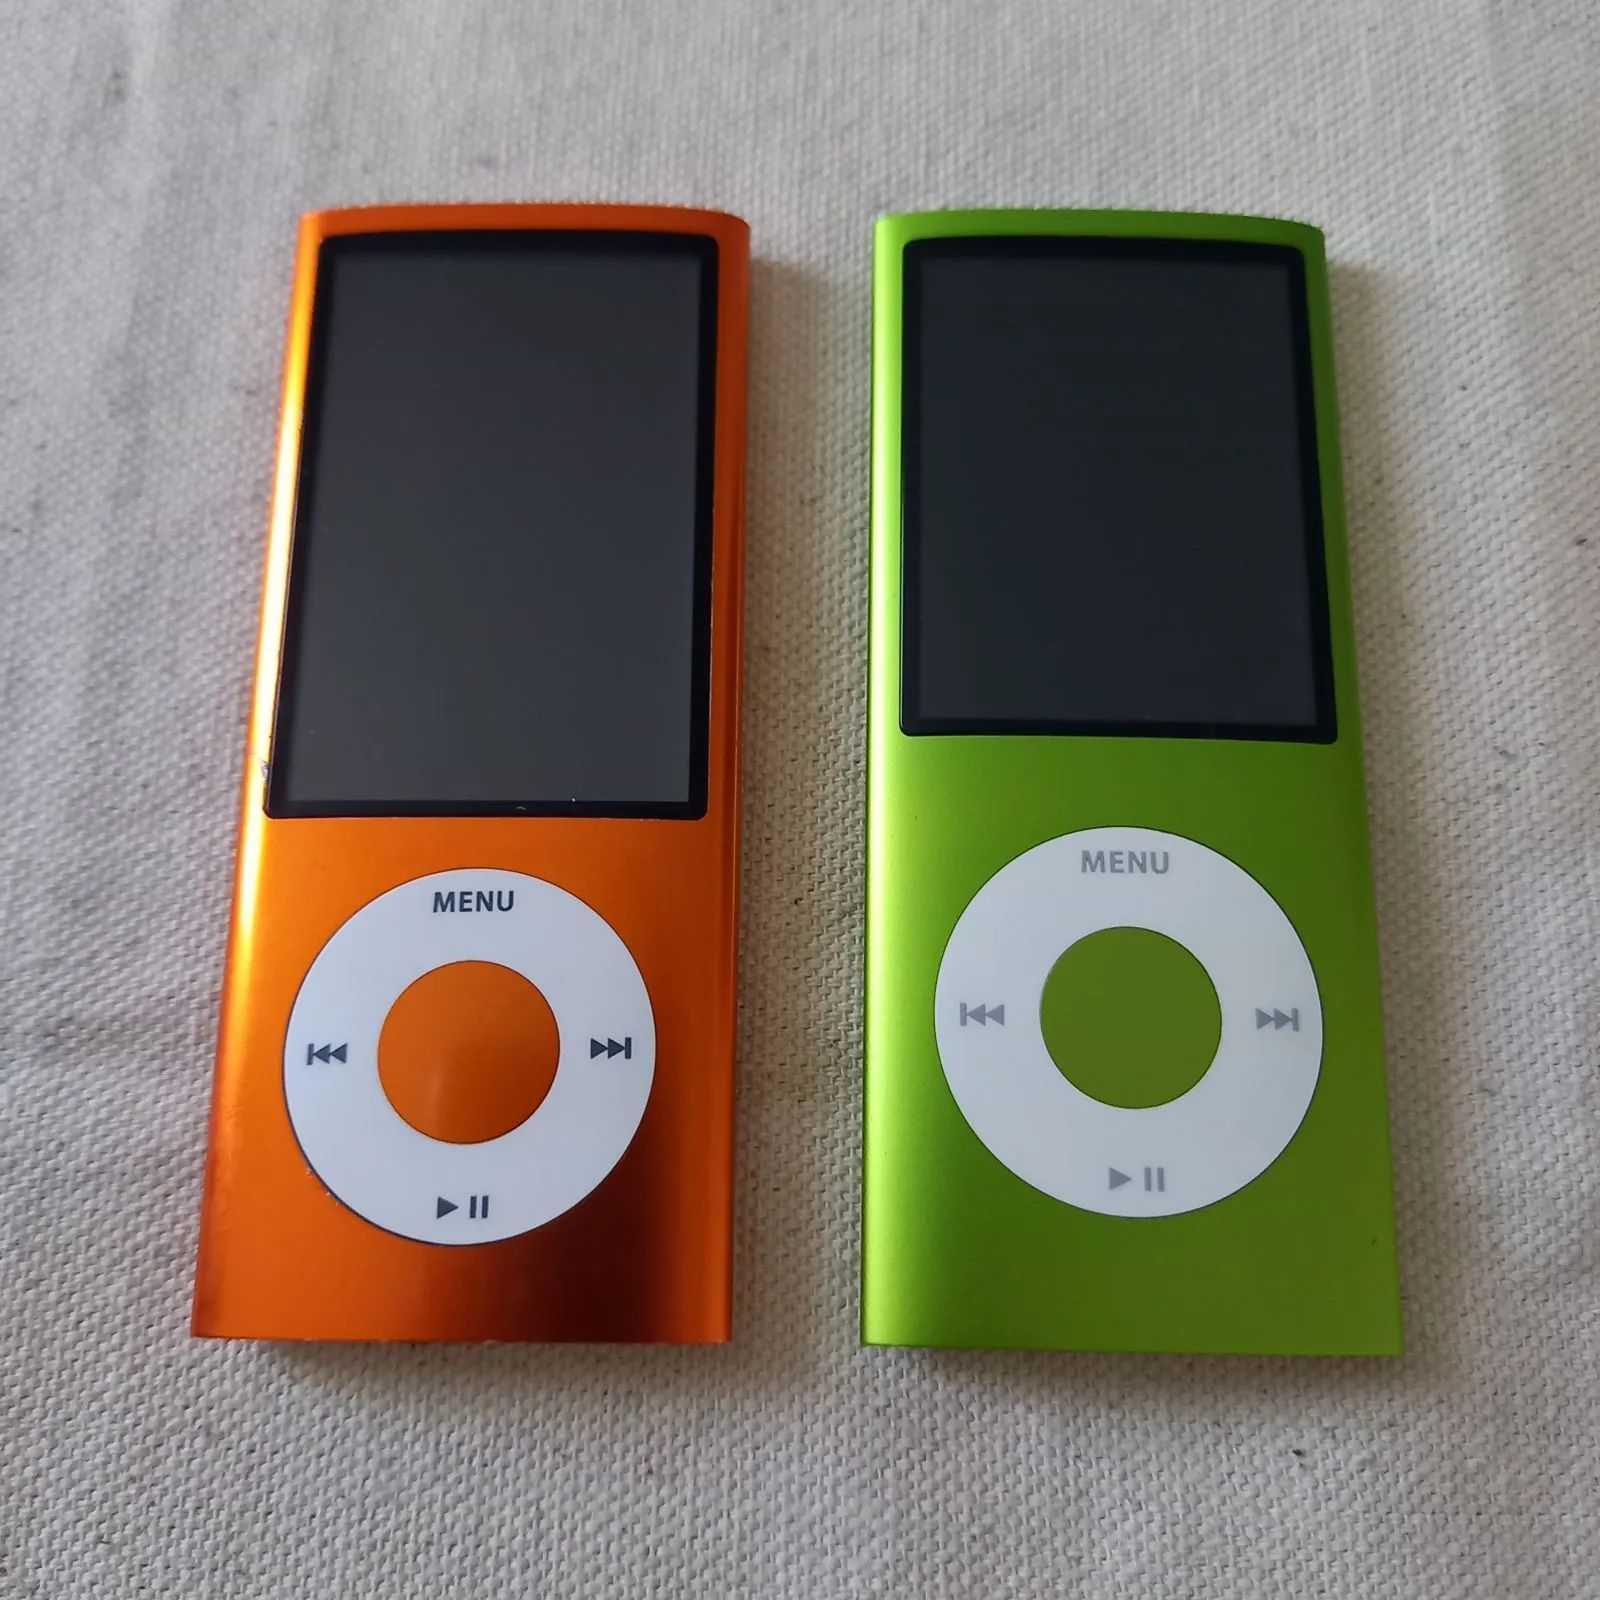 Apple】iPod nano 8GB 第5世代 第4世代 グリーン オレンジ - メルカリ